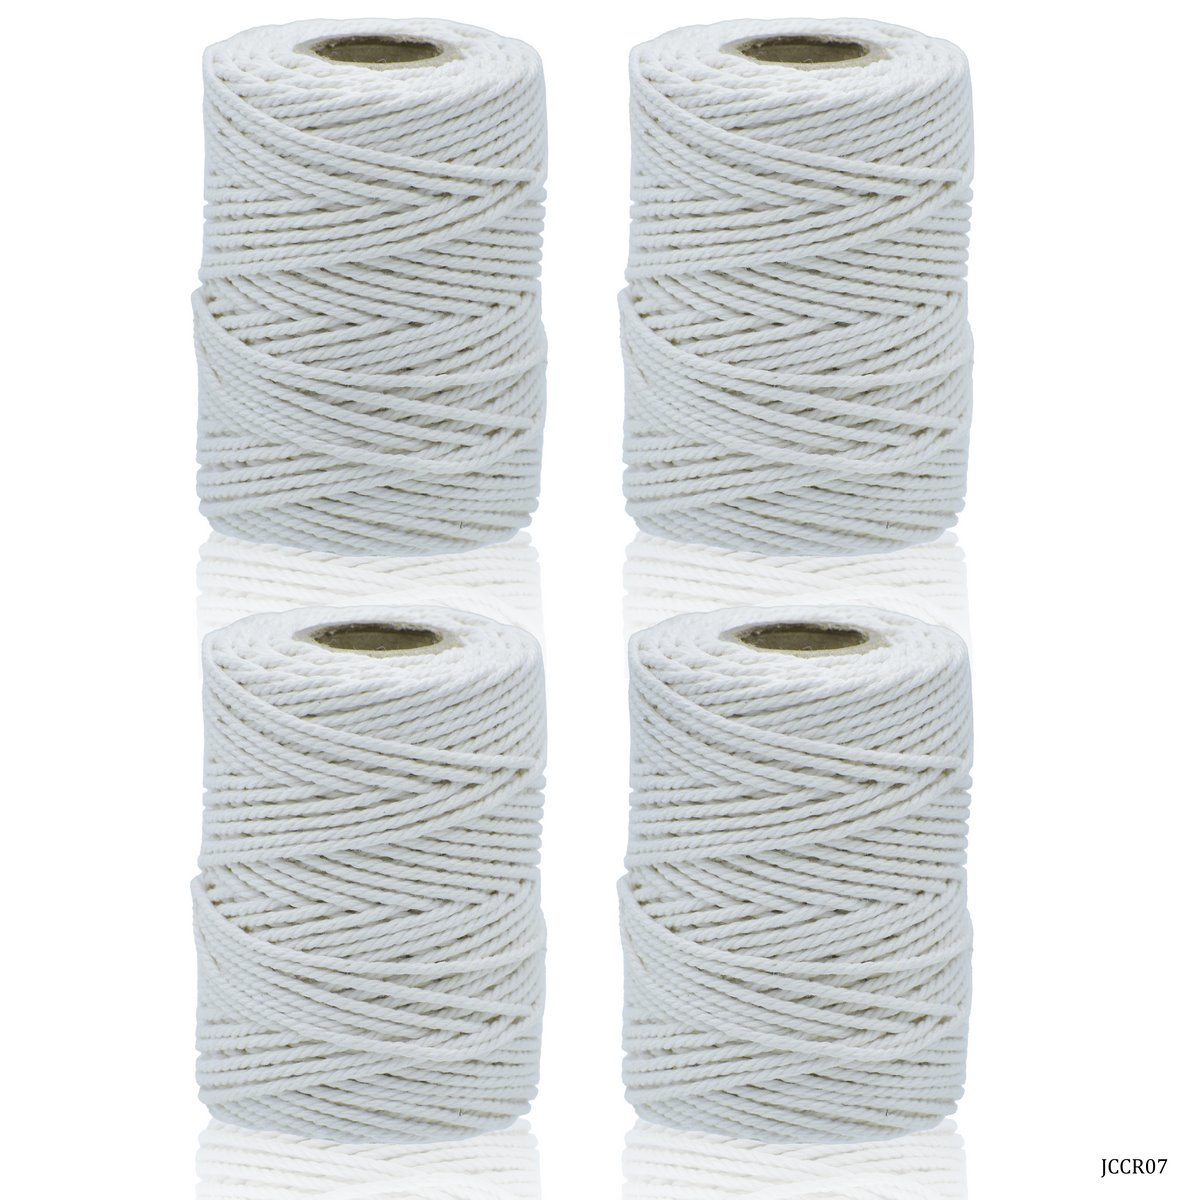 jags-mumbai Rope Jags Craft Cotton Rope Off White Colour 4Pcs JCCR07